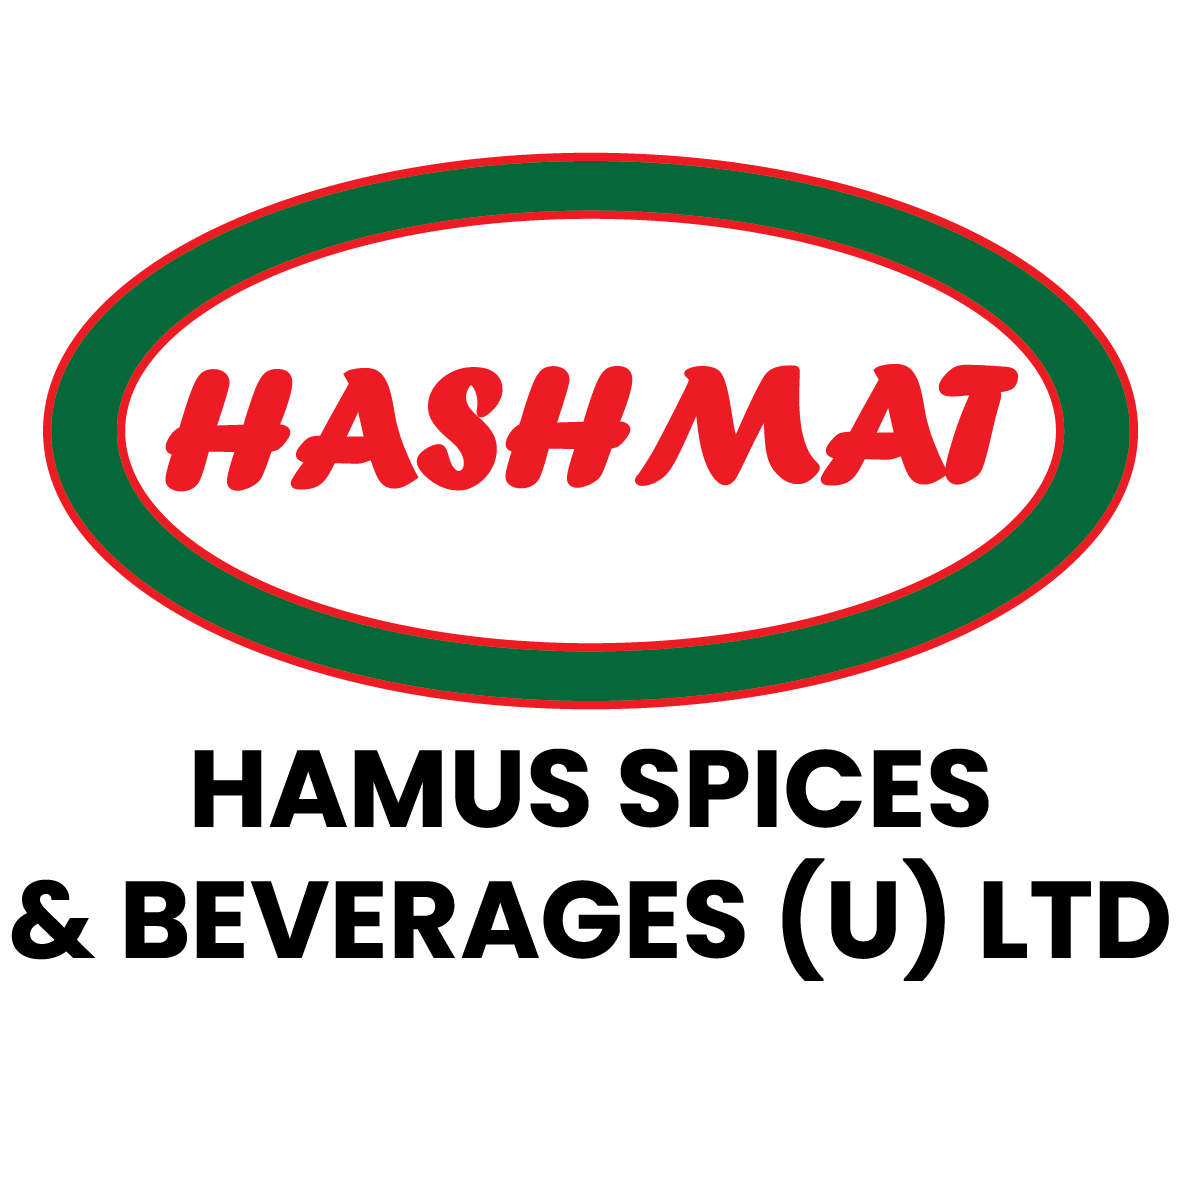 Hashmat Spices